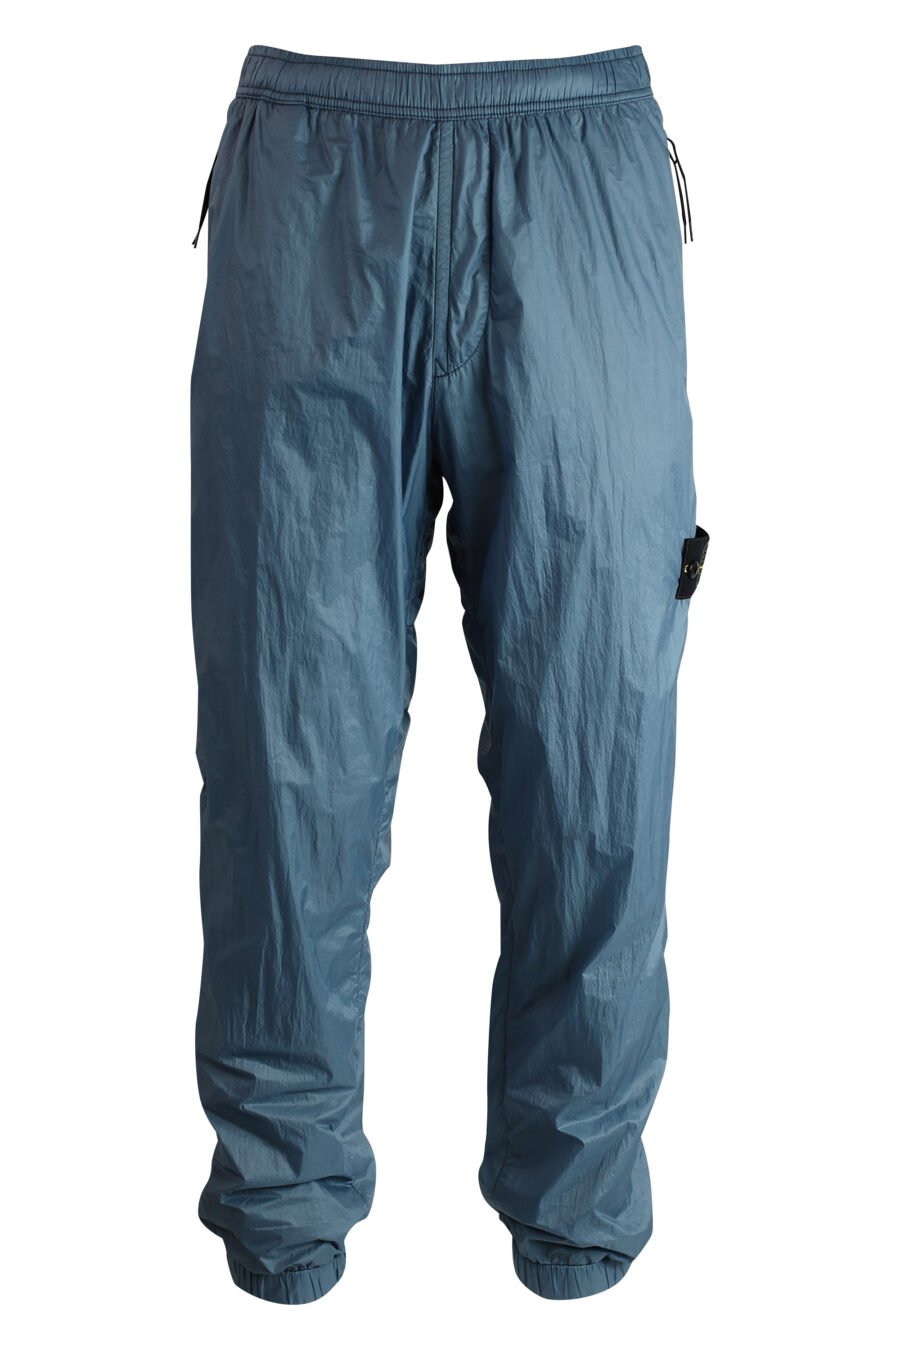 Pantalon bleu-gris avec patch - 8052572559723